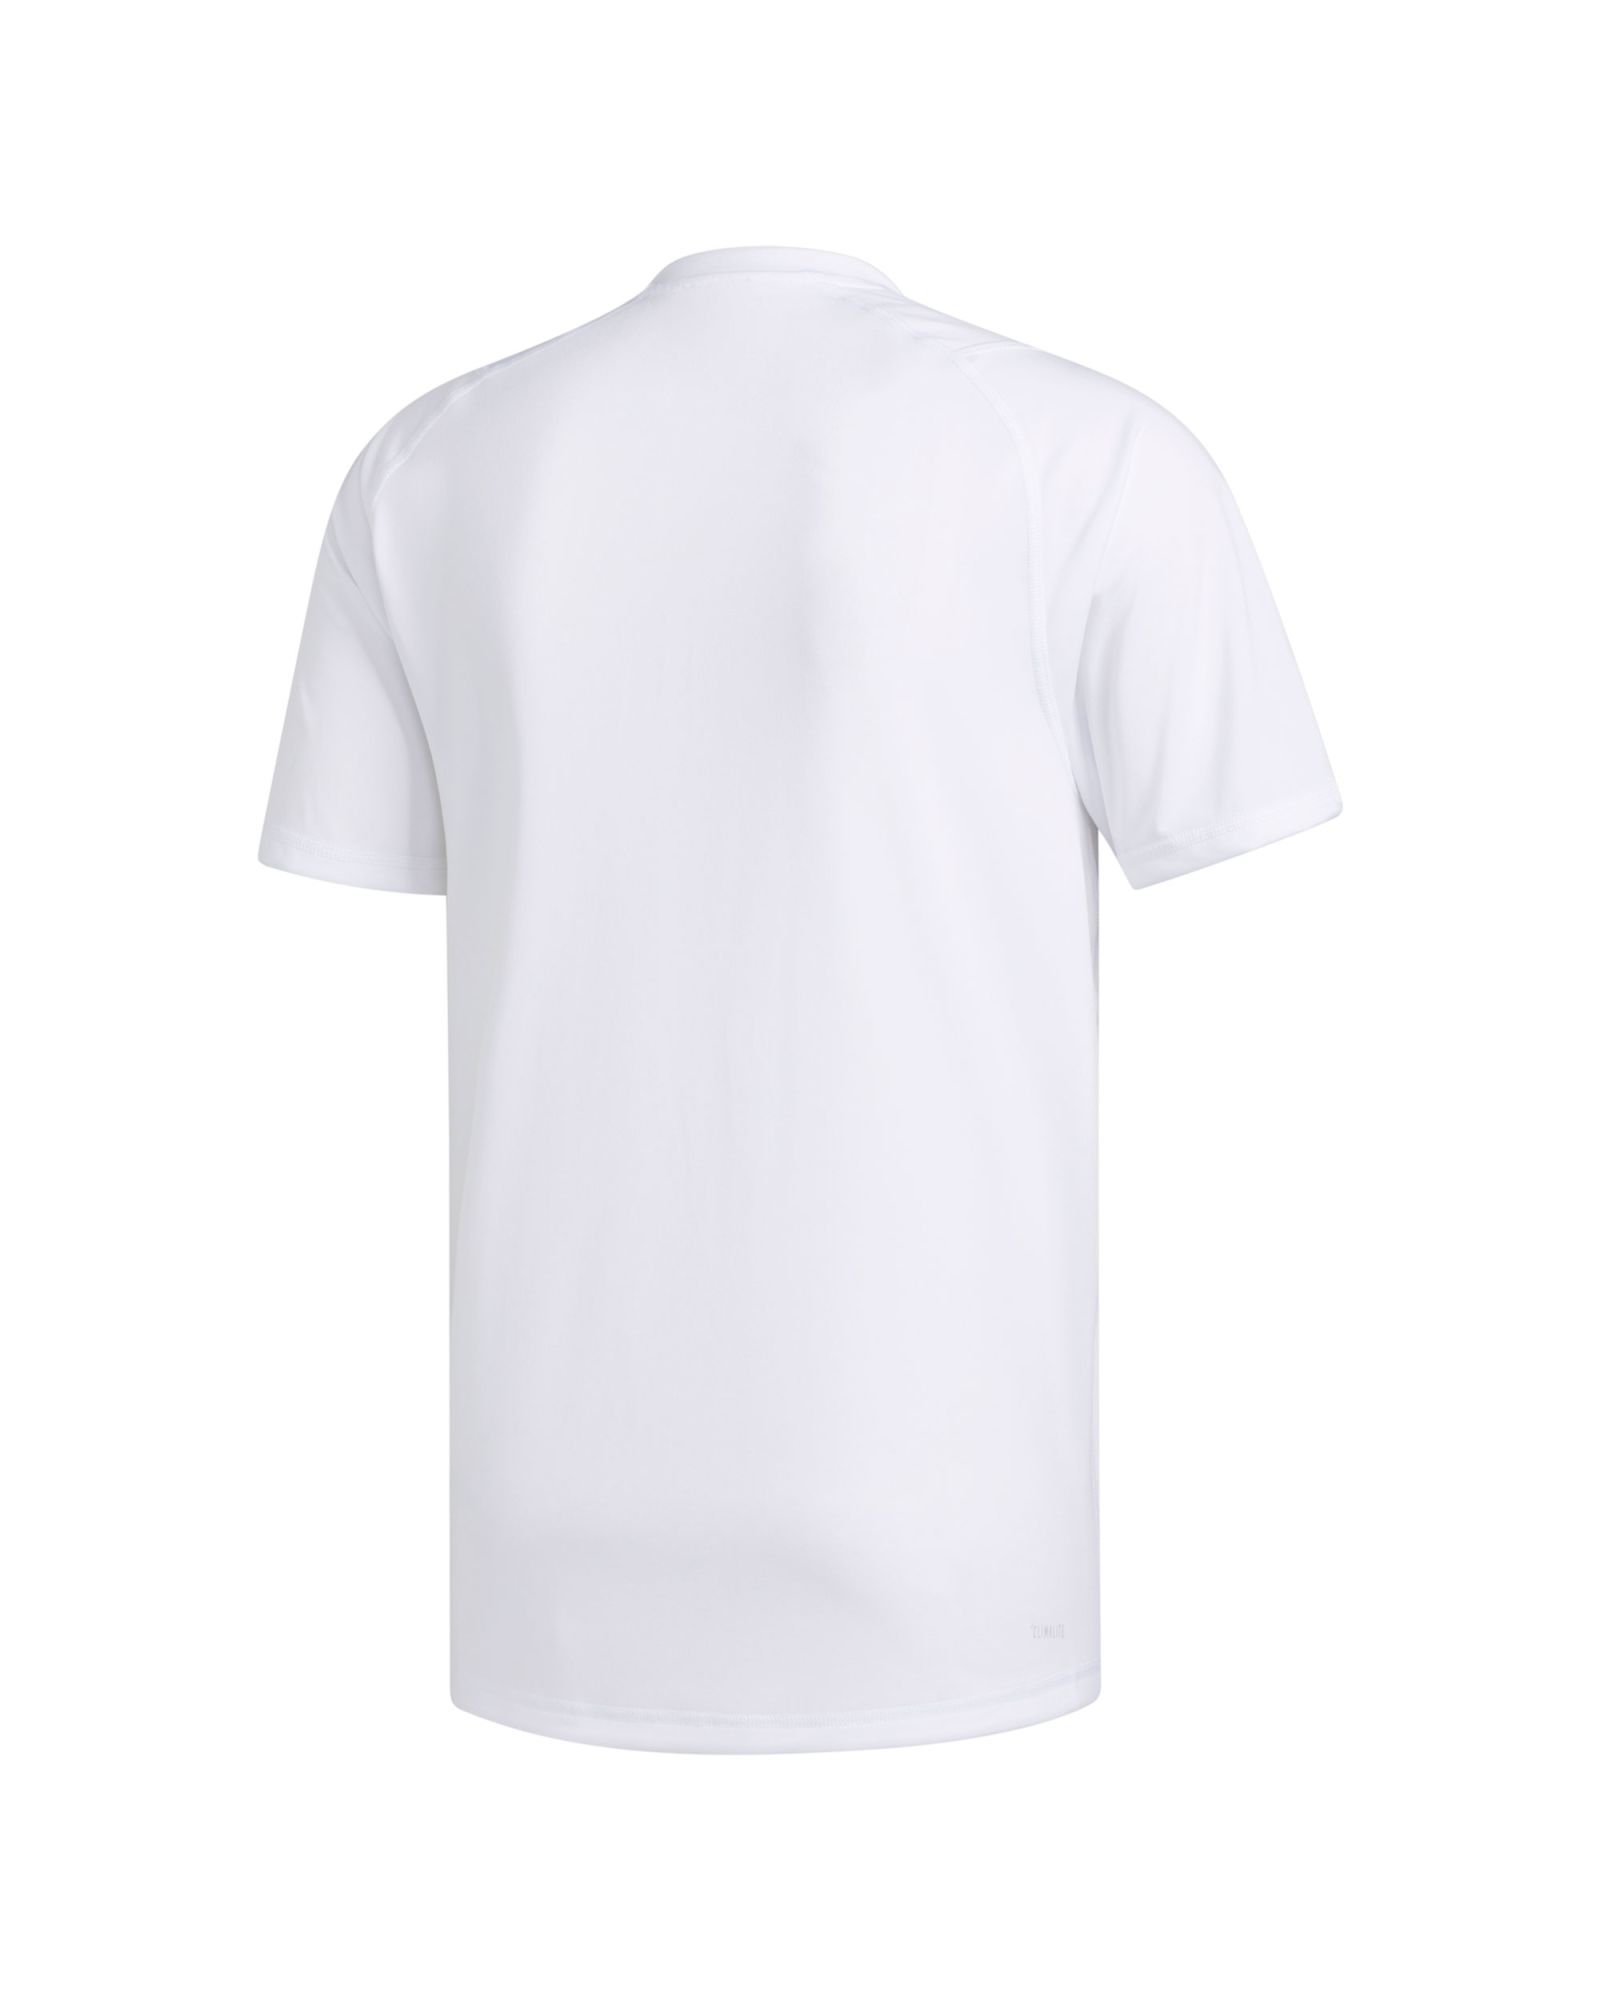 Camiseta de Training FreeLift BOS Blanco - Fútbol Factory